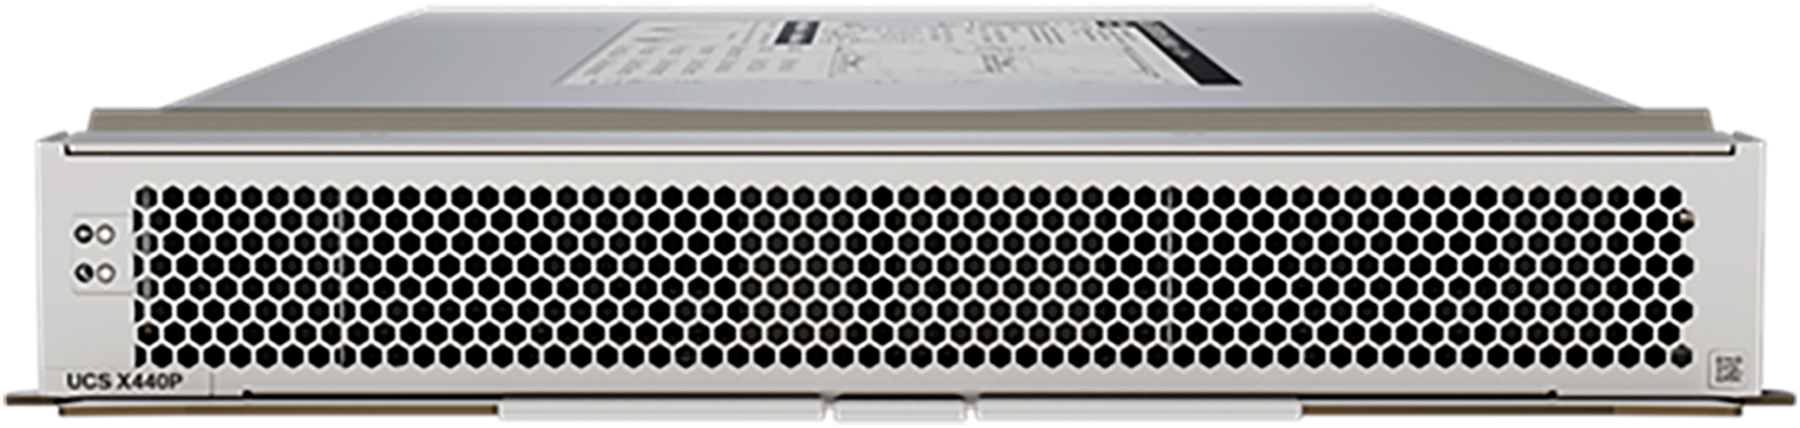 Cisco UCS X440p PCIe Node